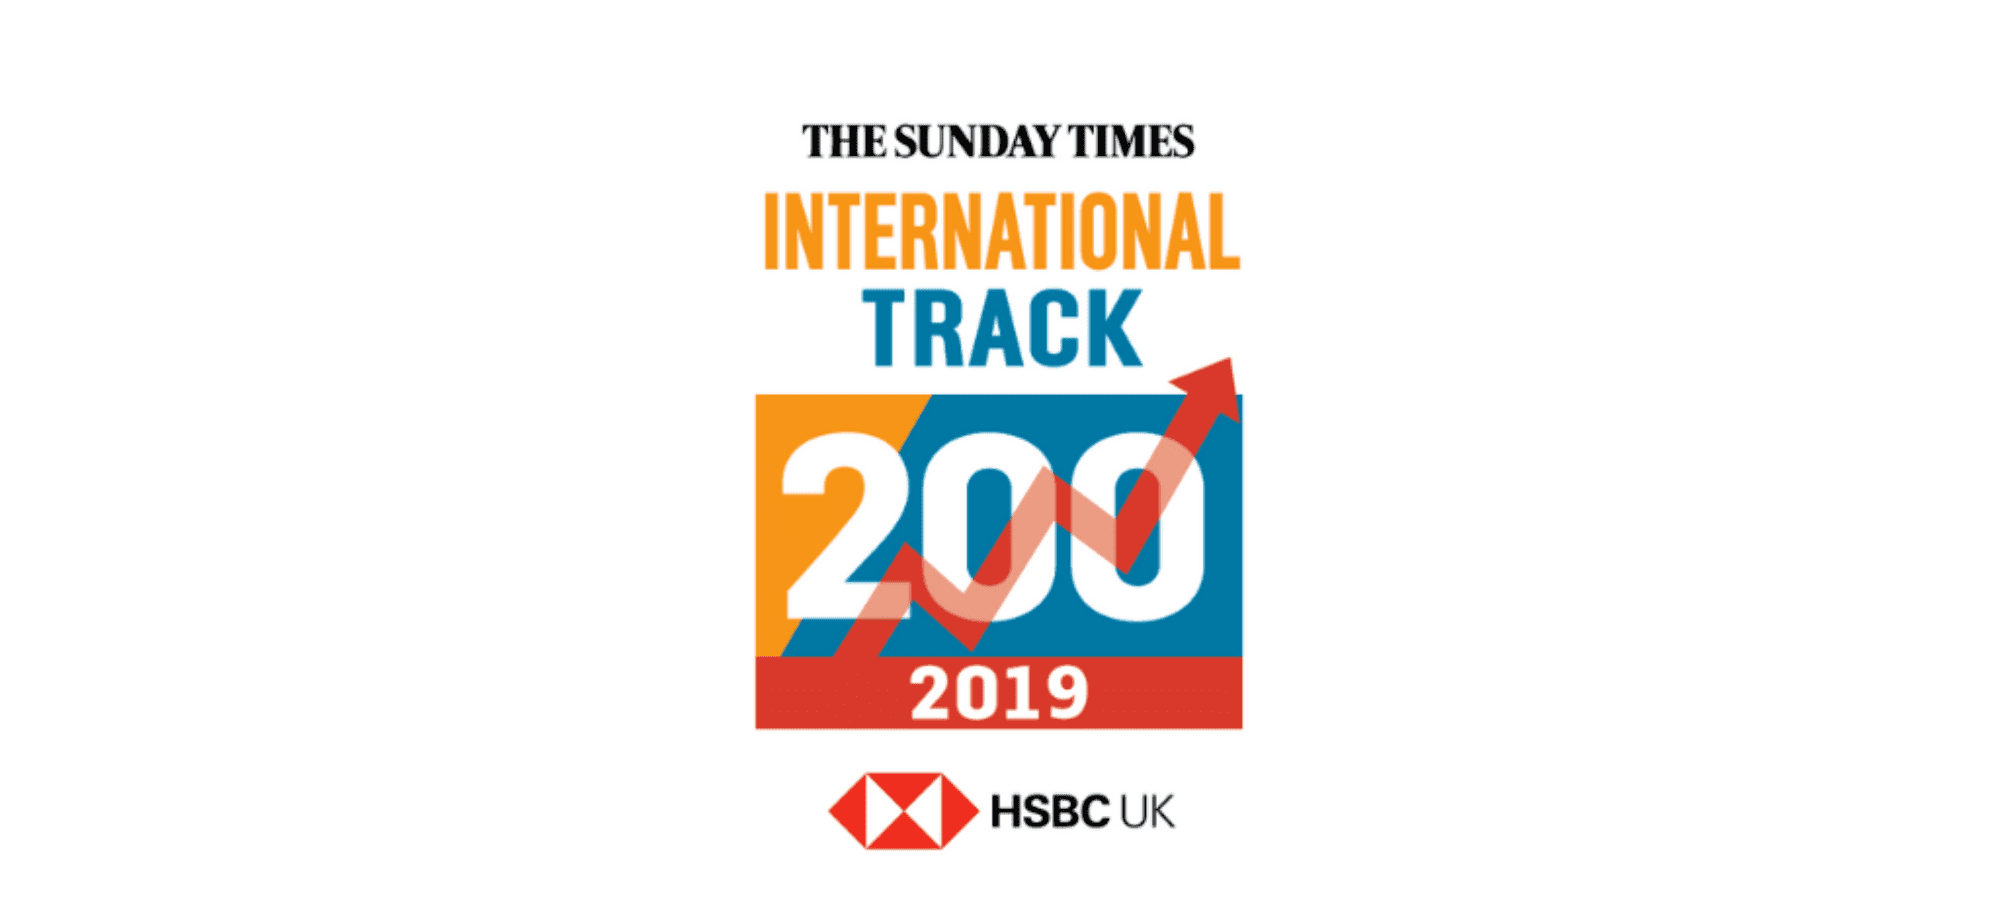 The Sunday Times International Track 200